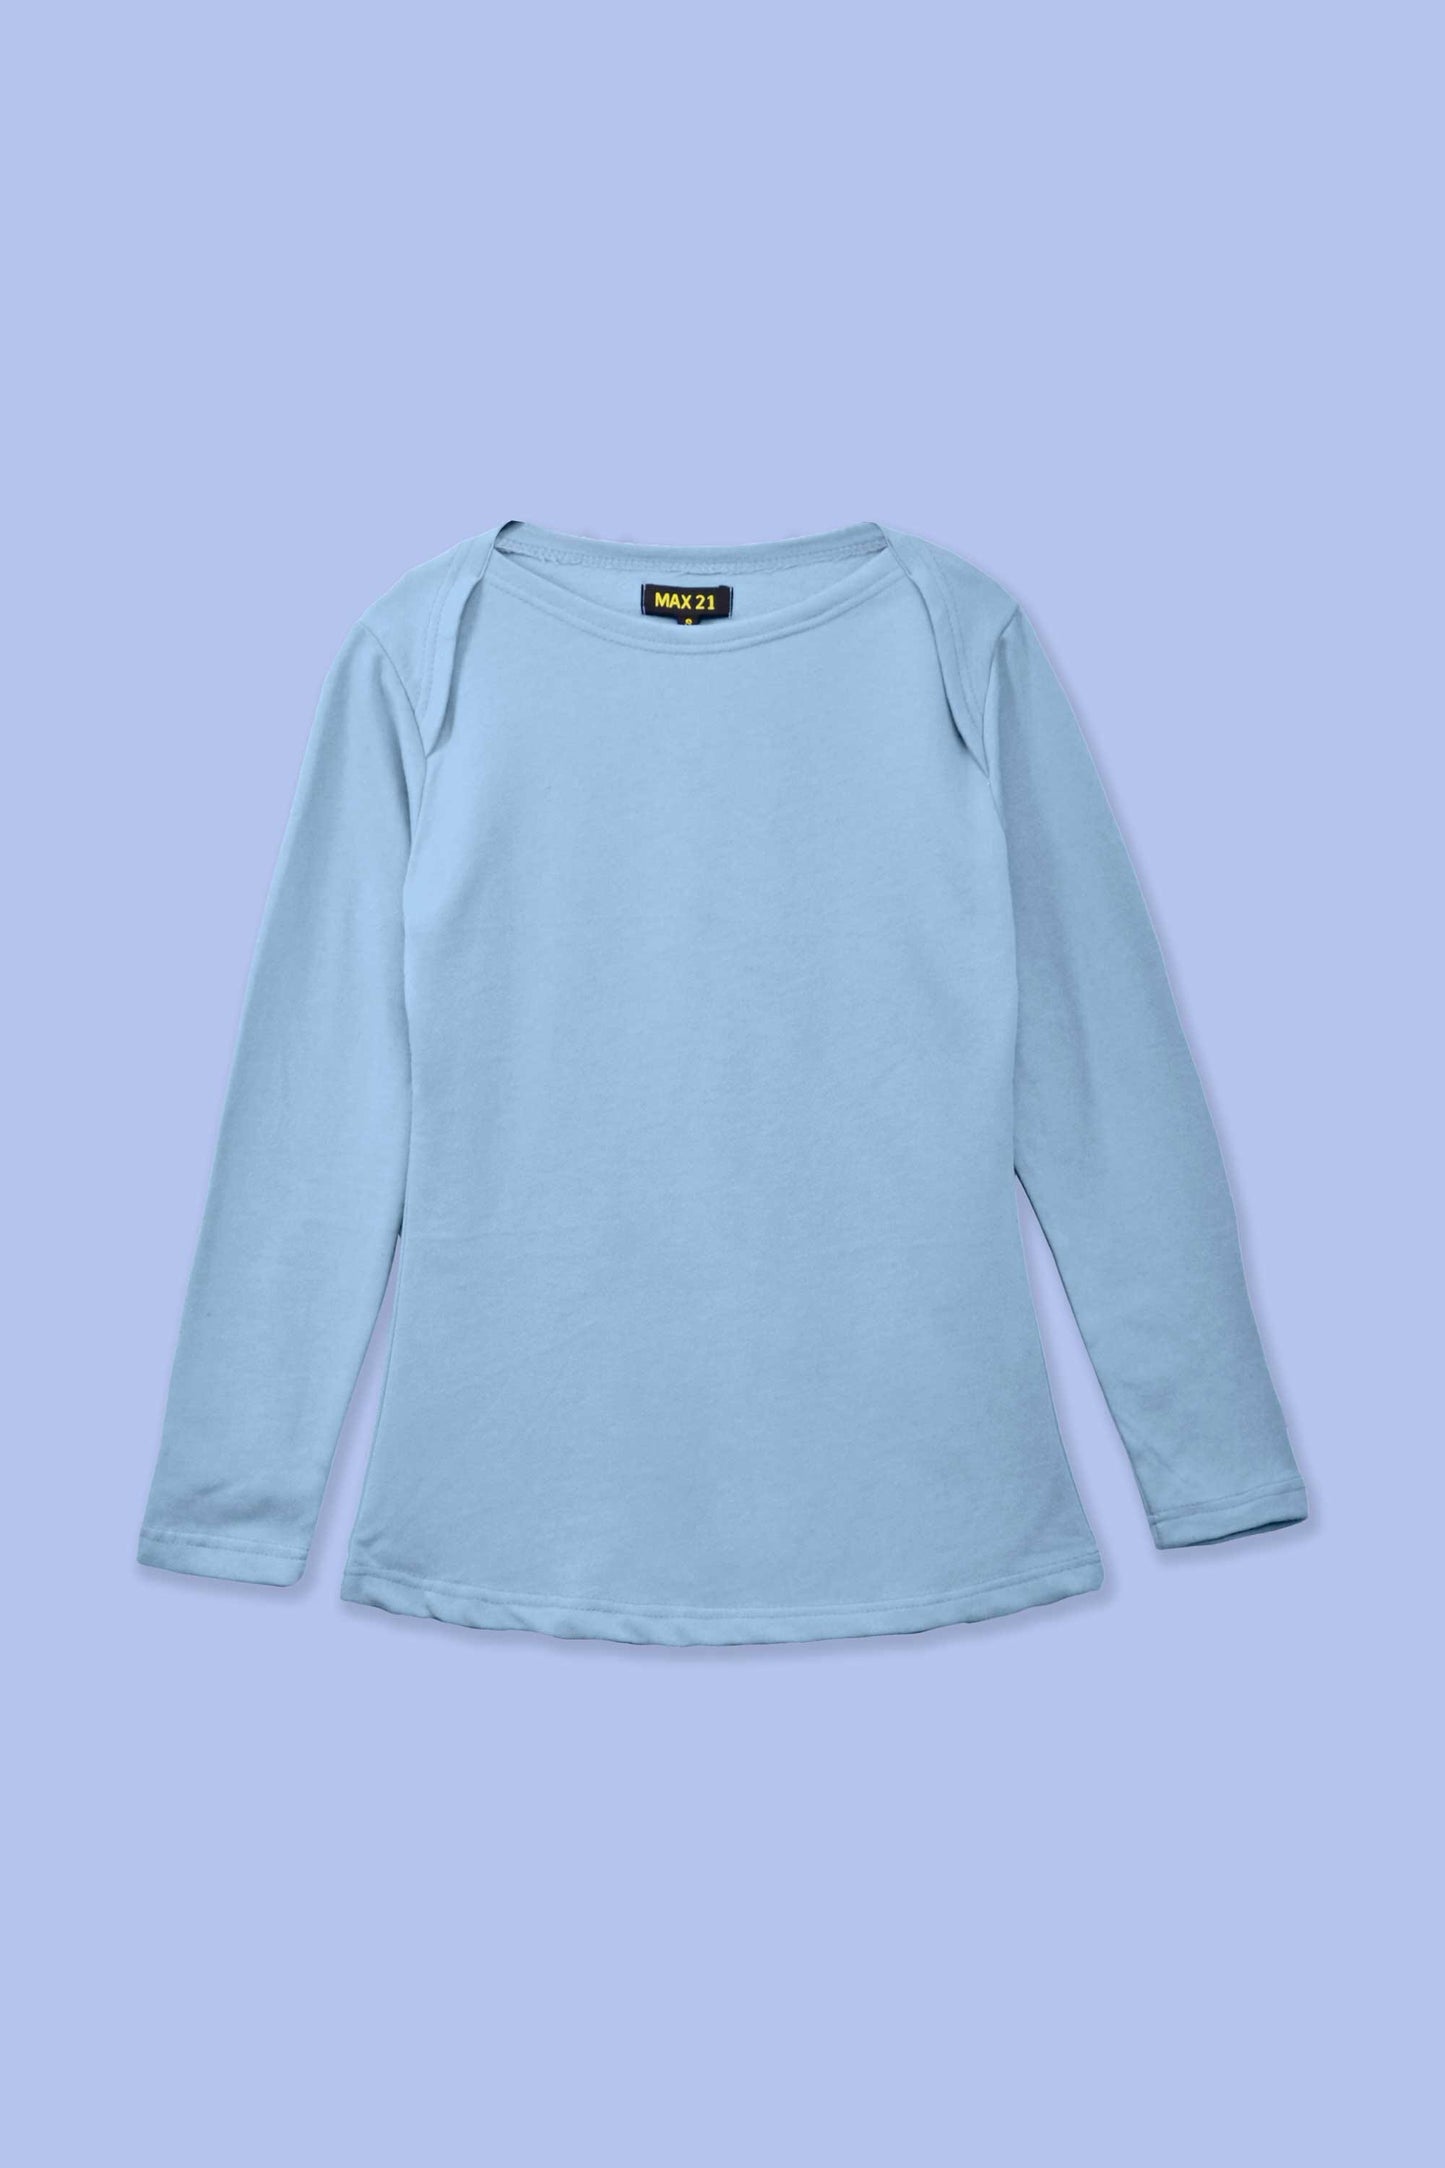 Max 21 Women’s Stylish Long Sleeves Sweat Shirt Women's Casual Shirt SZK Turquoise S 